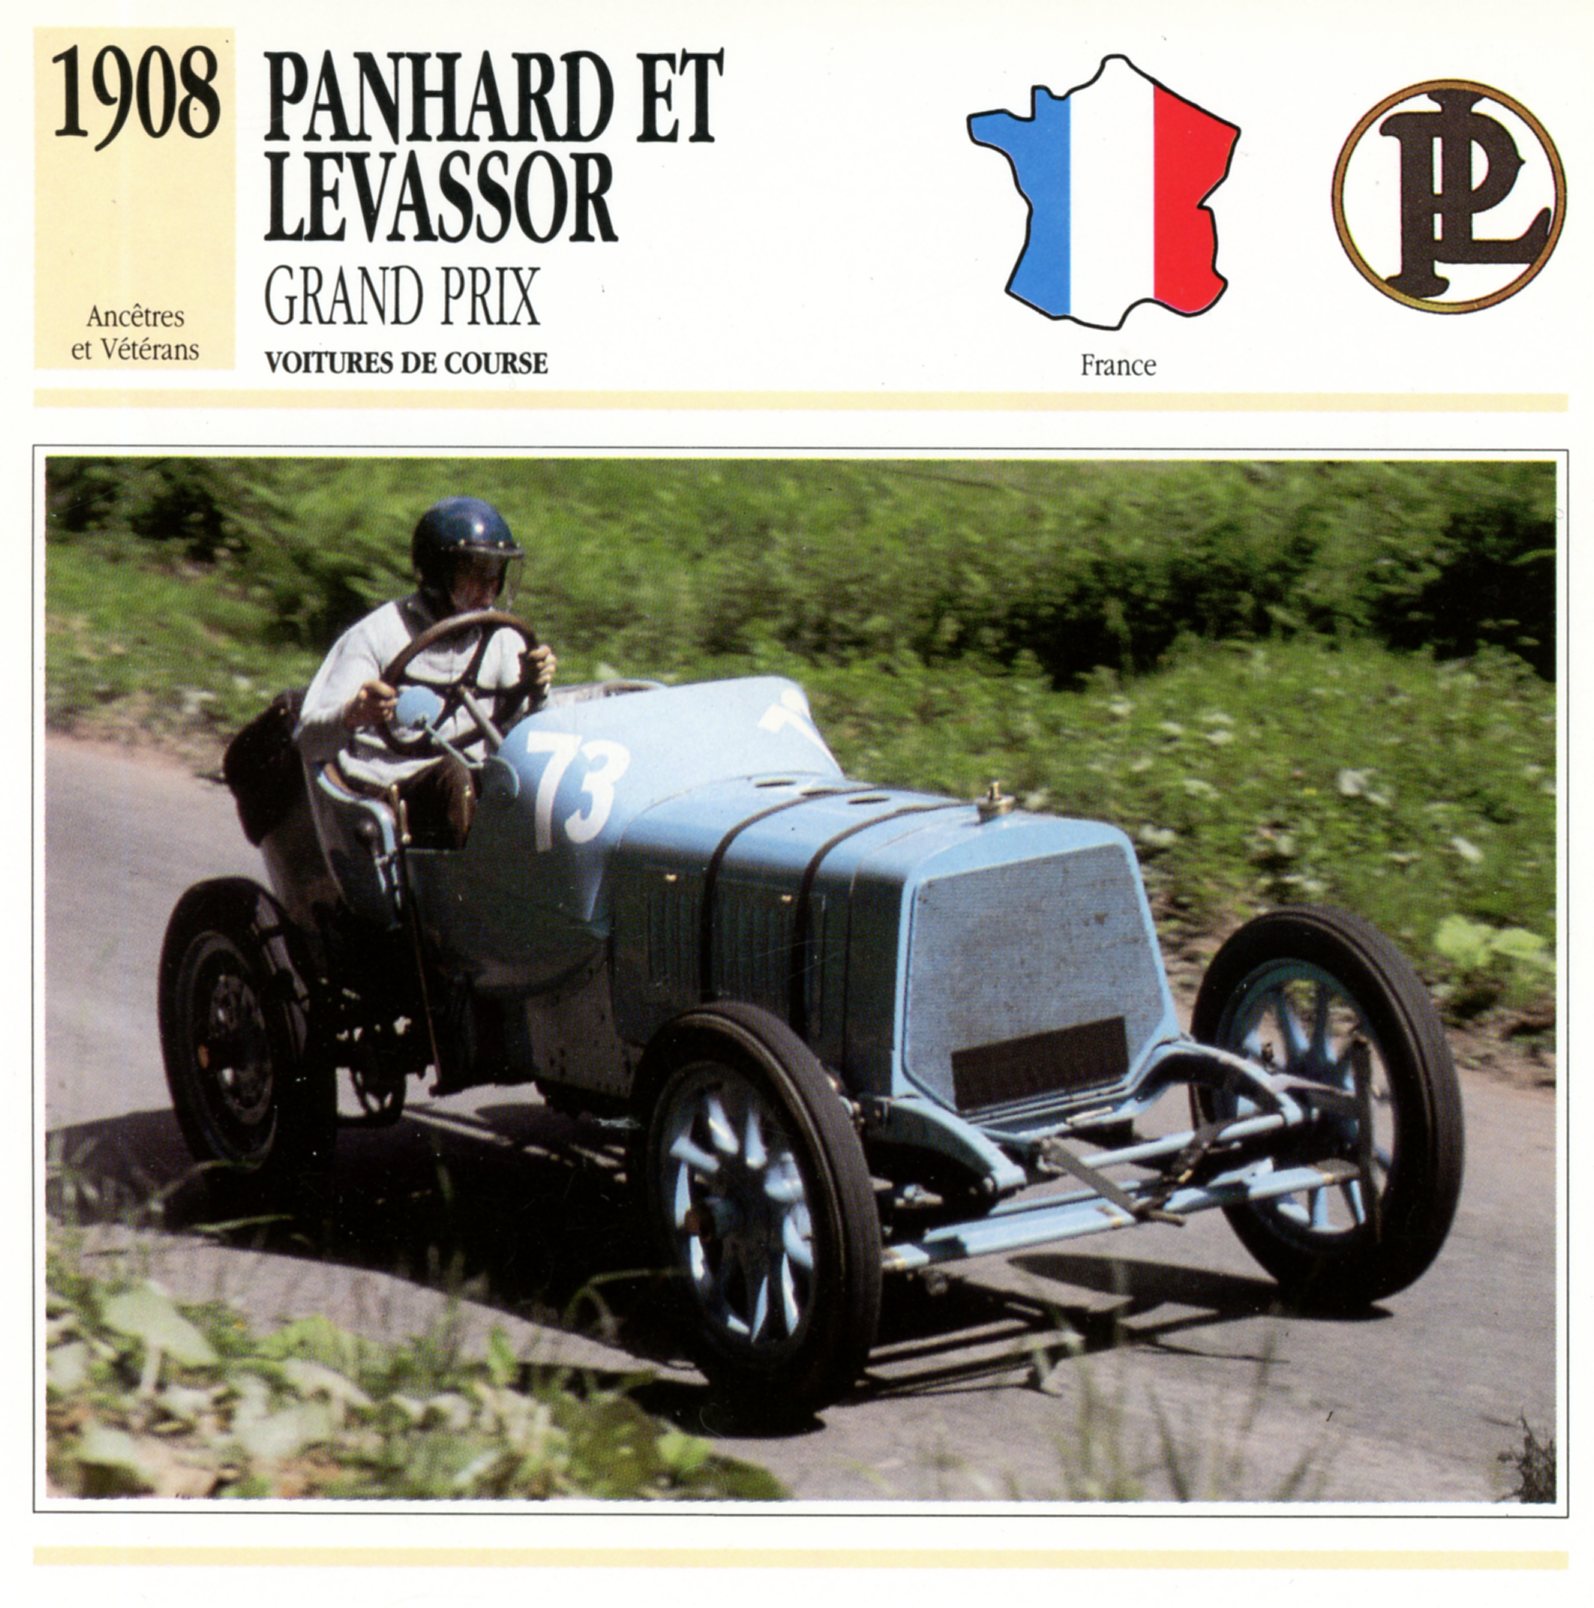 FICHE-PANHARD-LEVASSOR-GRAND-PRIX-1908-LEMASTERBROCKERS